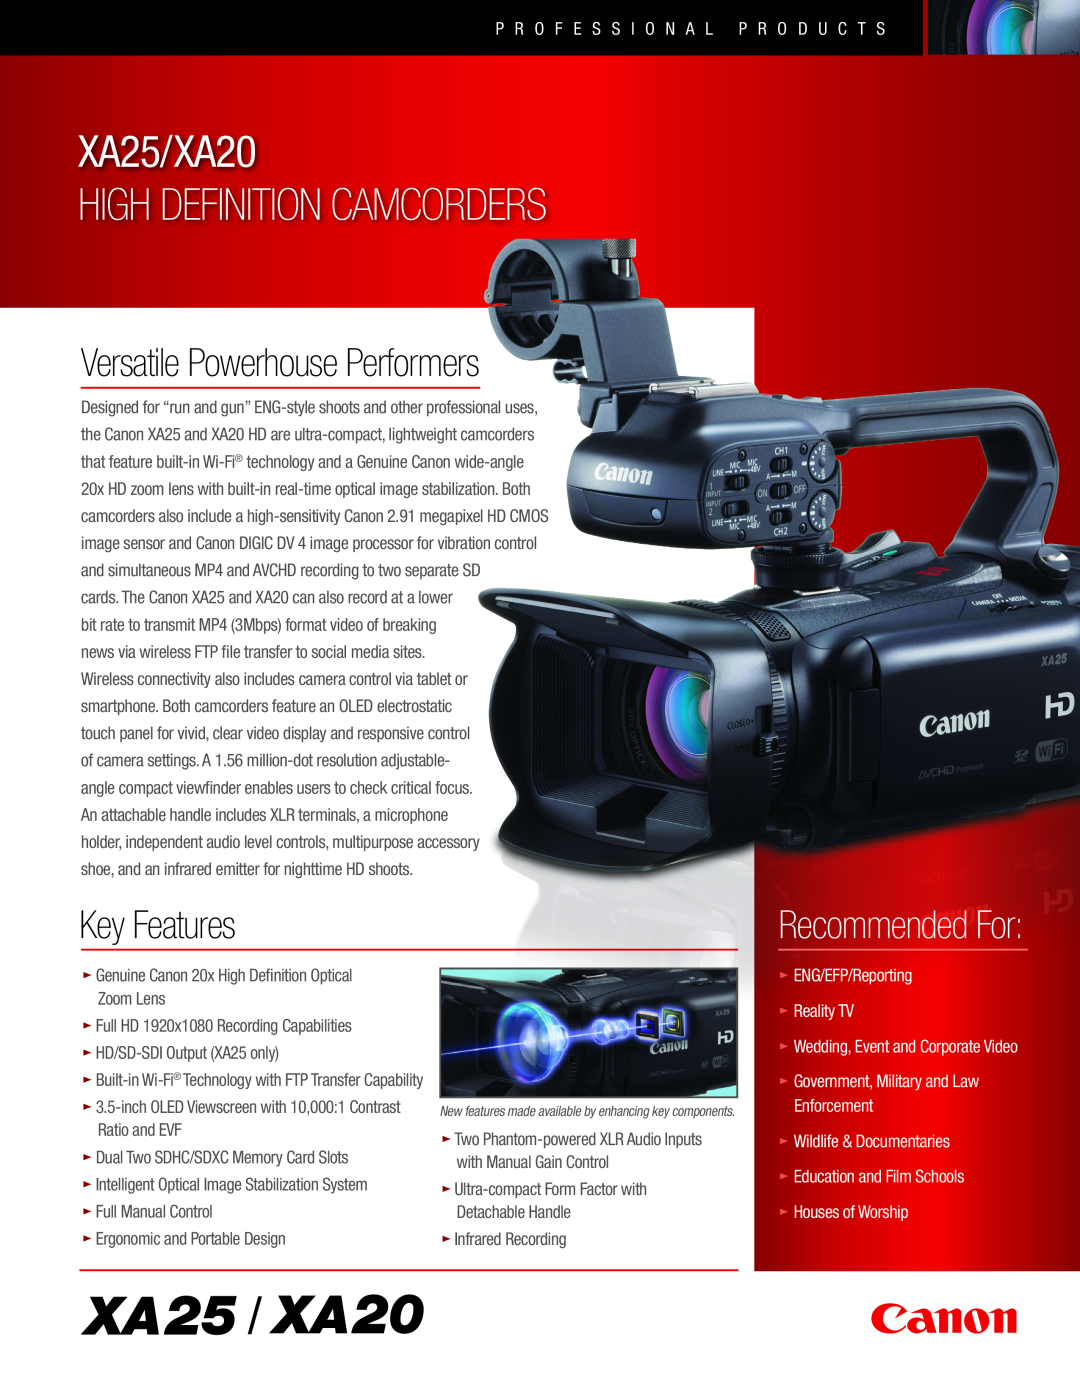 Canon high definition camcorder manual Versatile Powerhouse Performers, Key Features, XA25/XA20 HIGH DEFINITION CAMCORDERS 